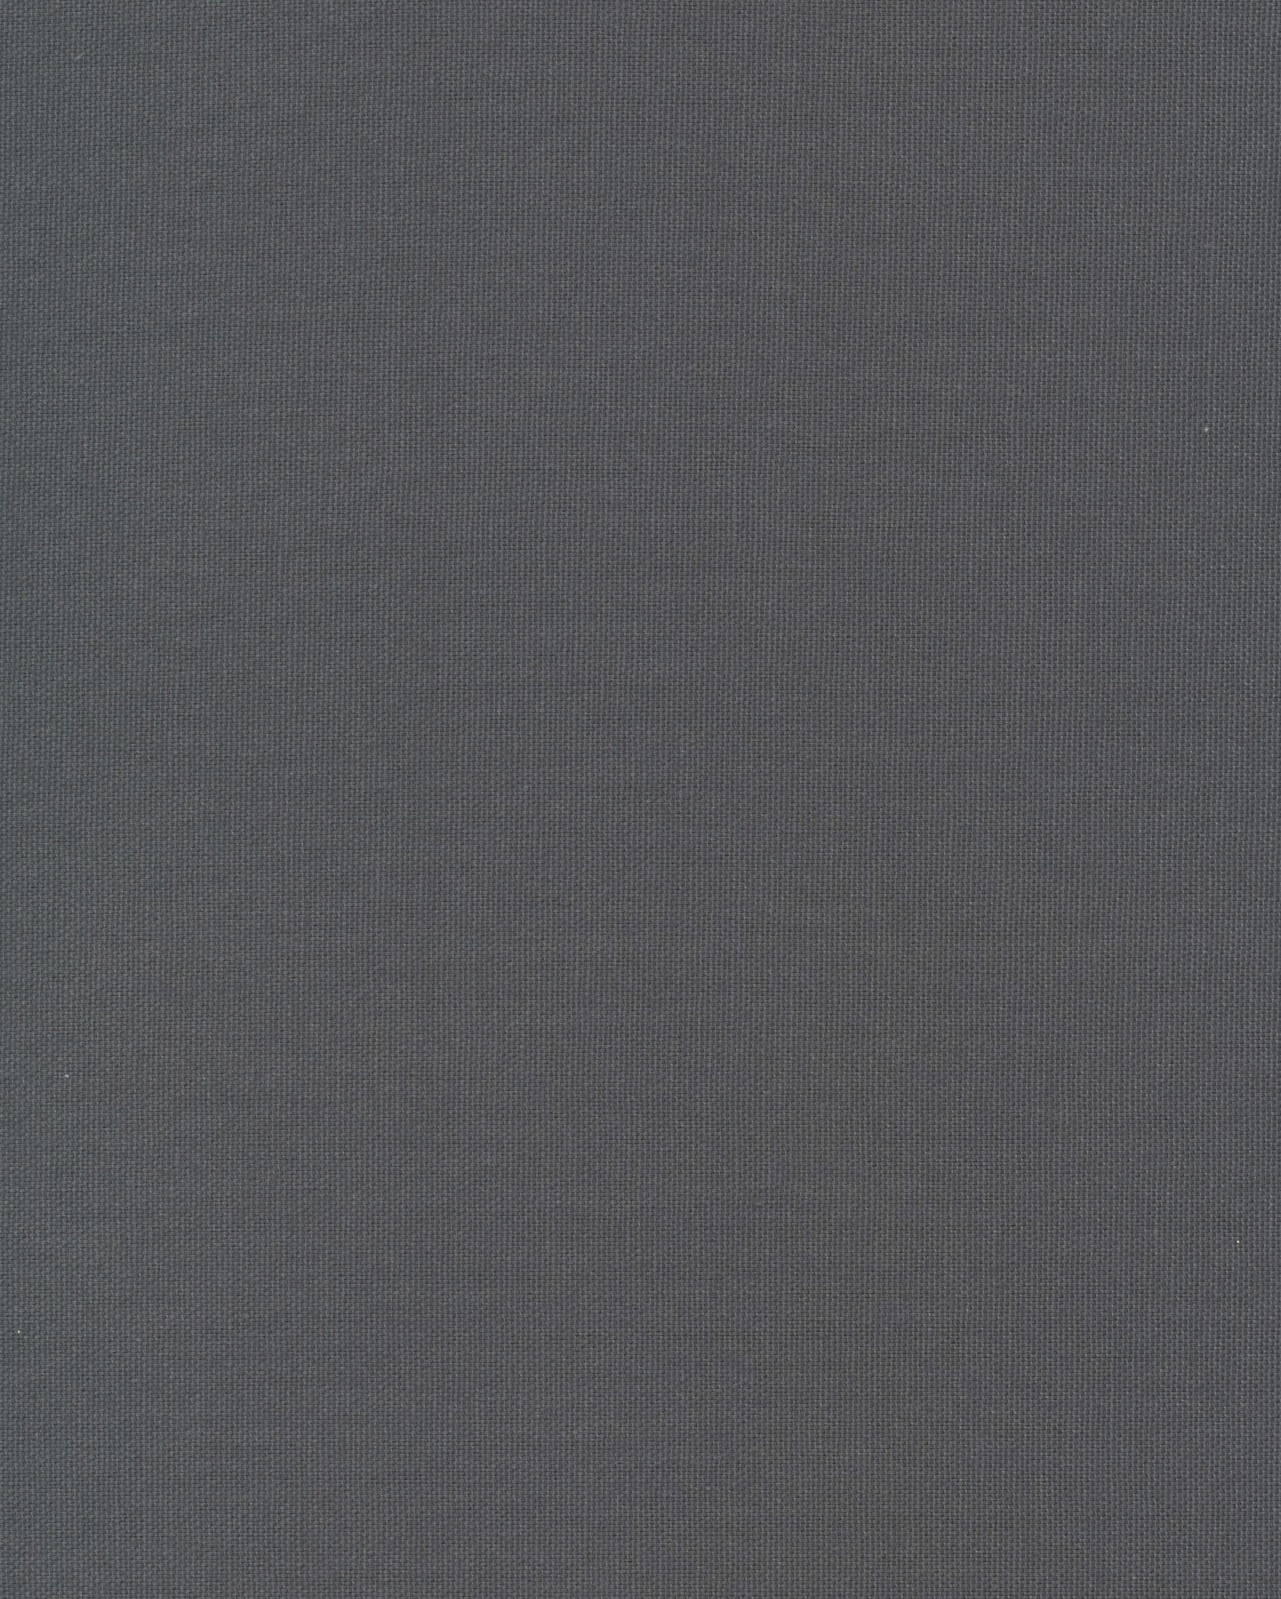 Black Canvas Fabric - Fabric Warehouse